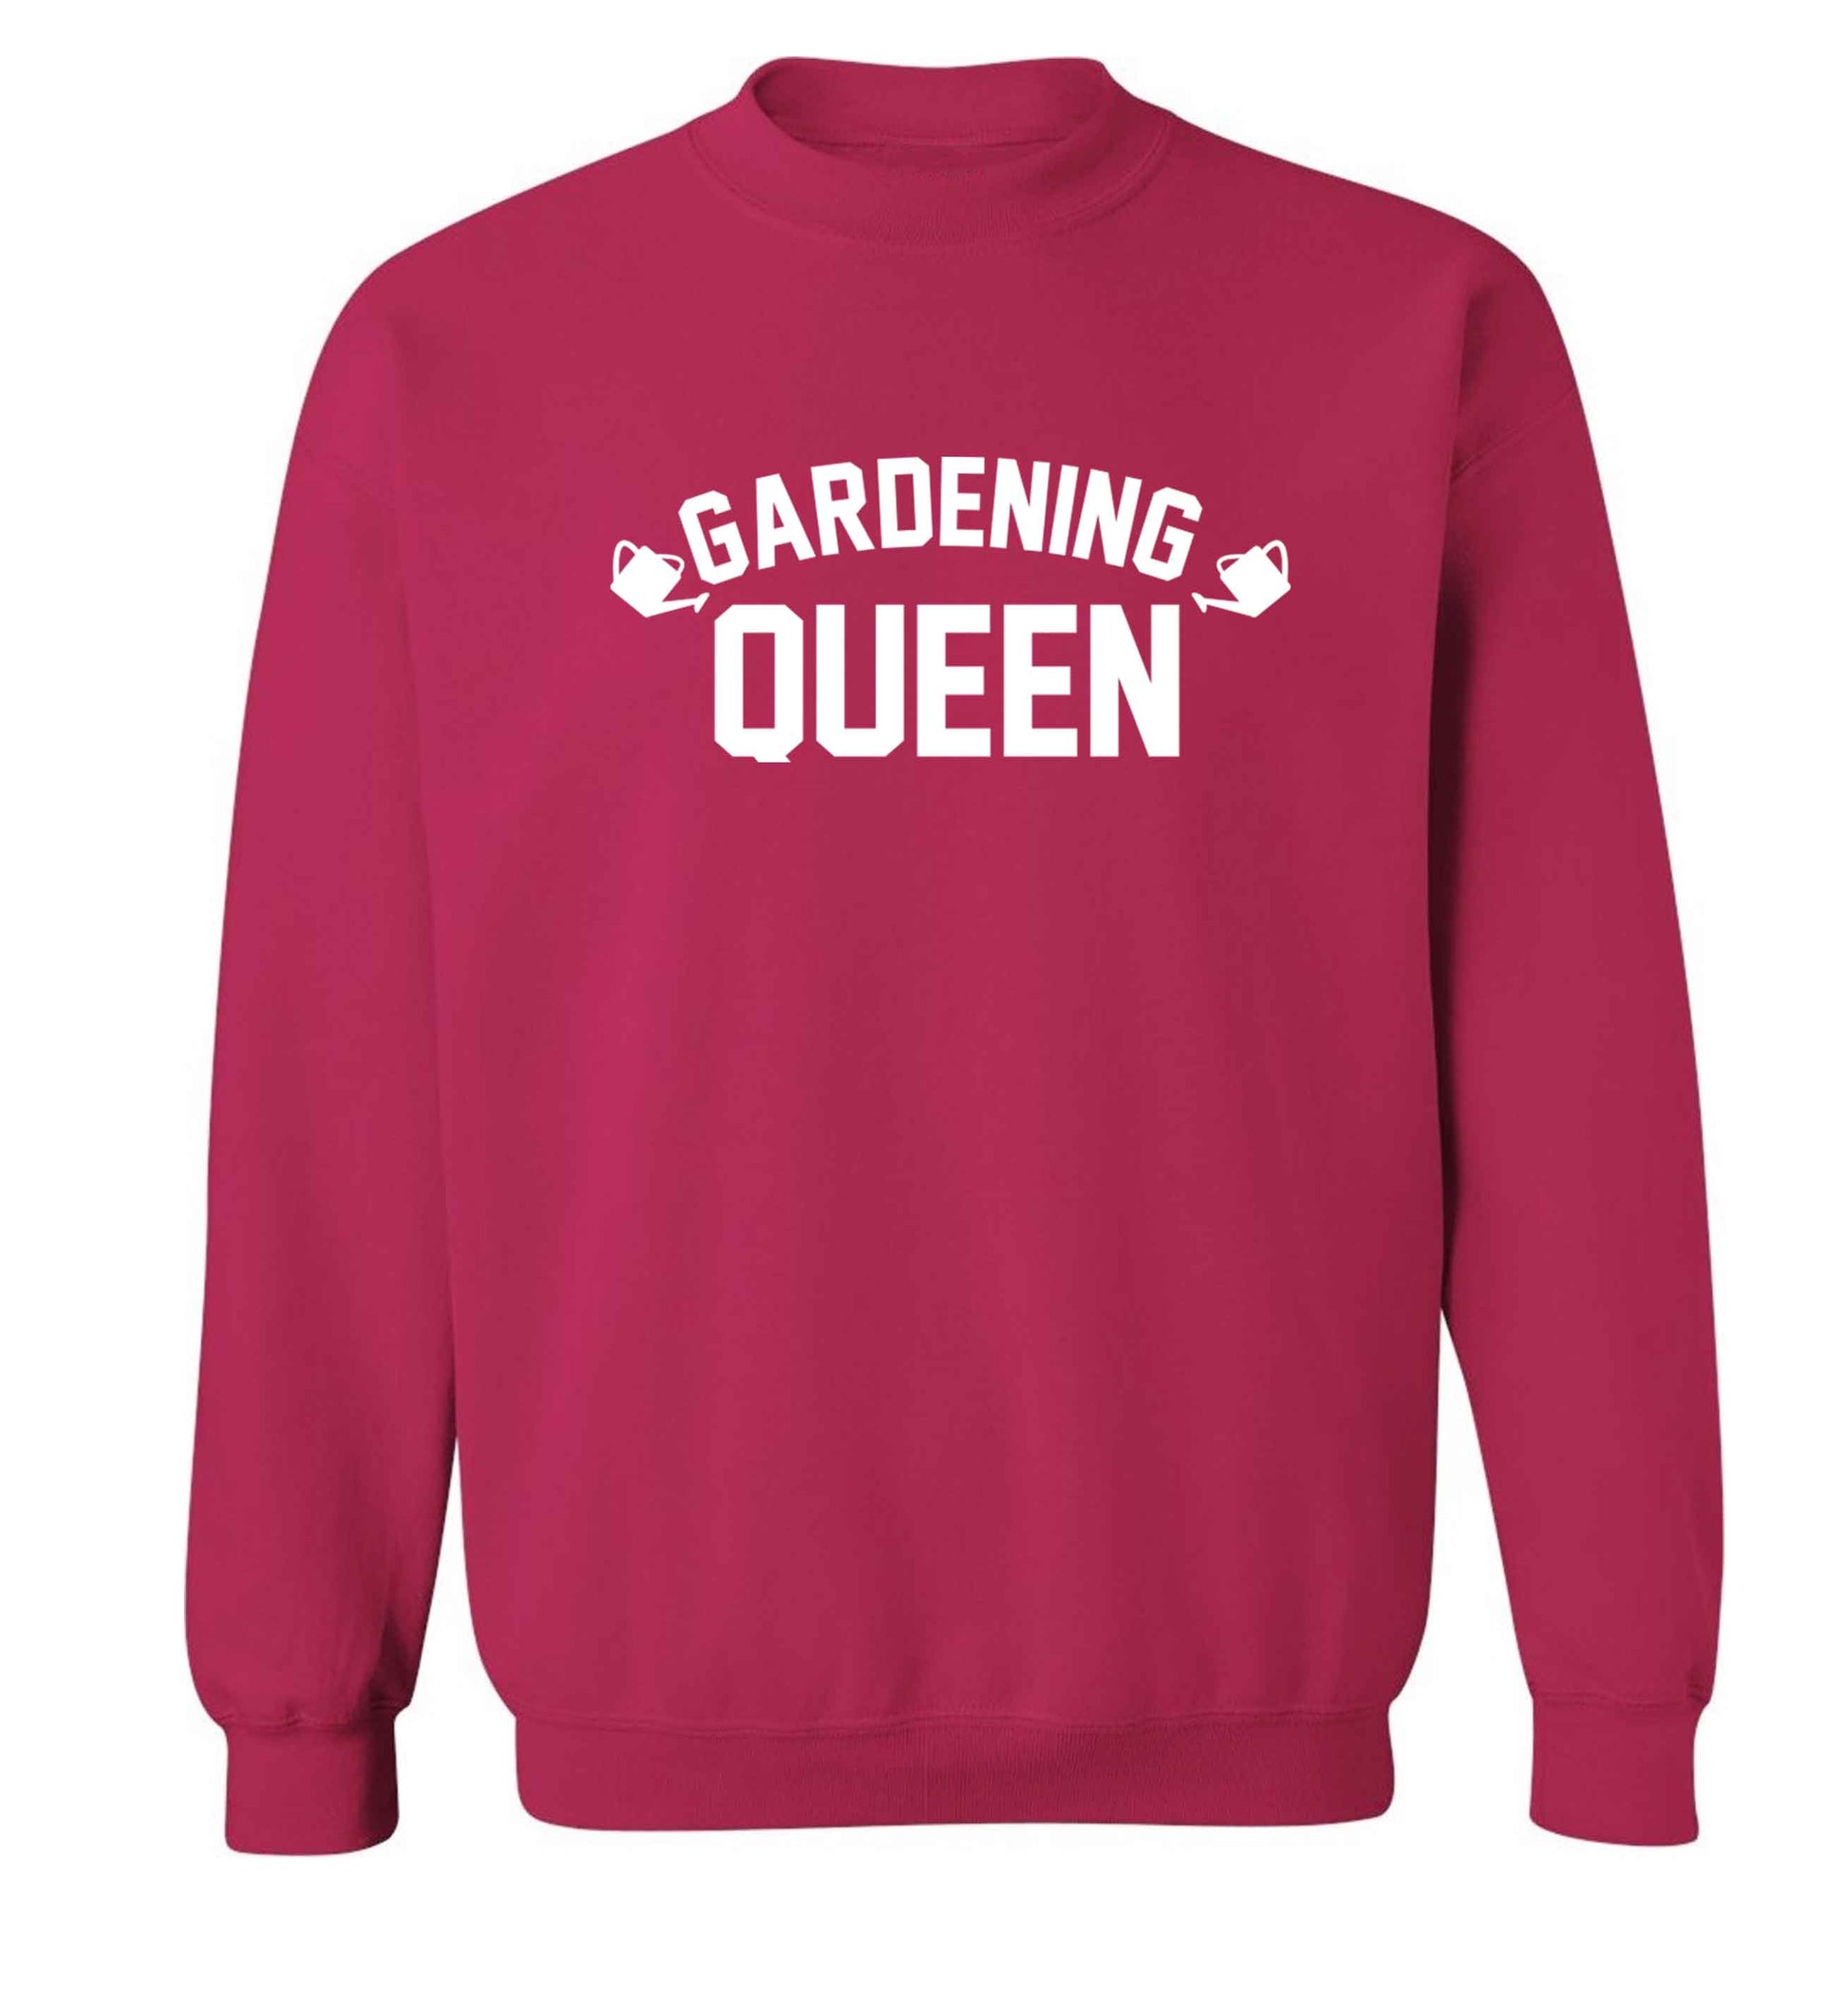 Gardening queen Adult's unisex pink Sweater 2XL